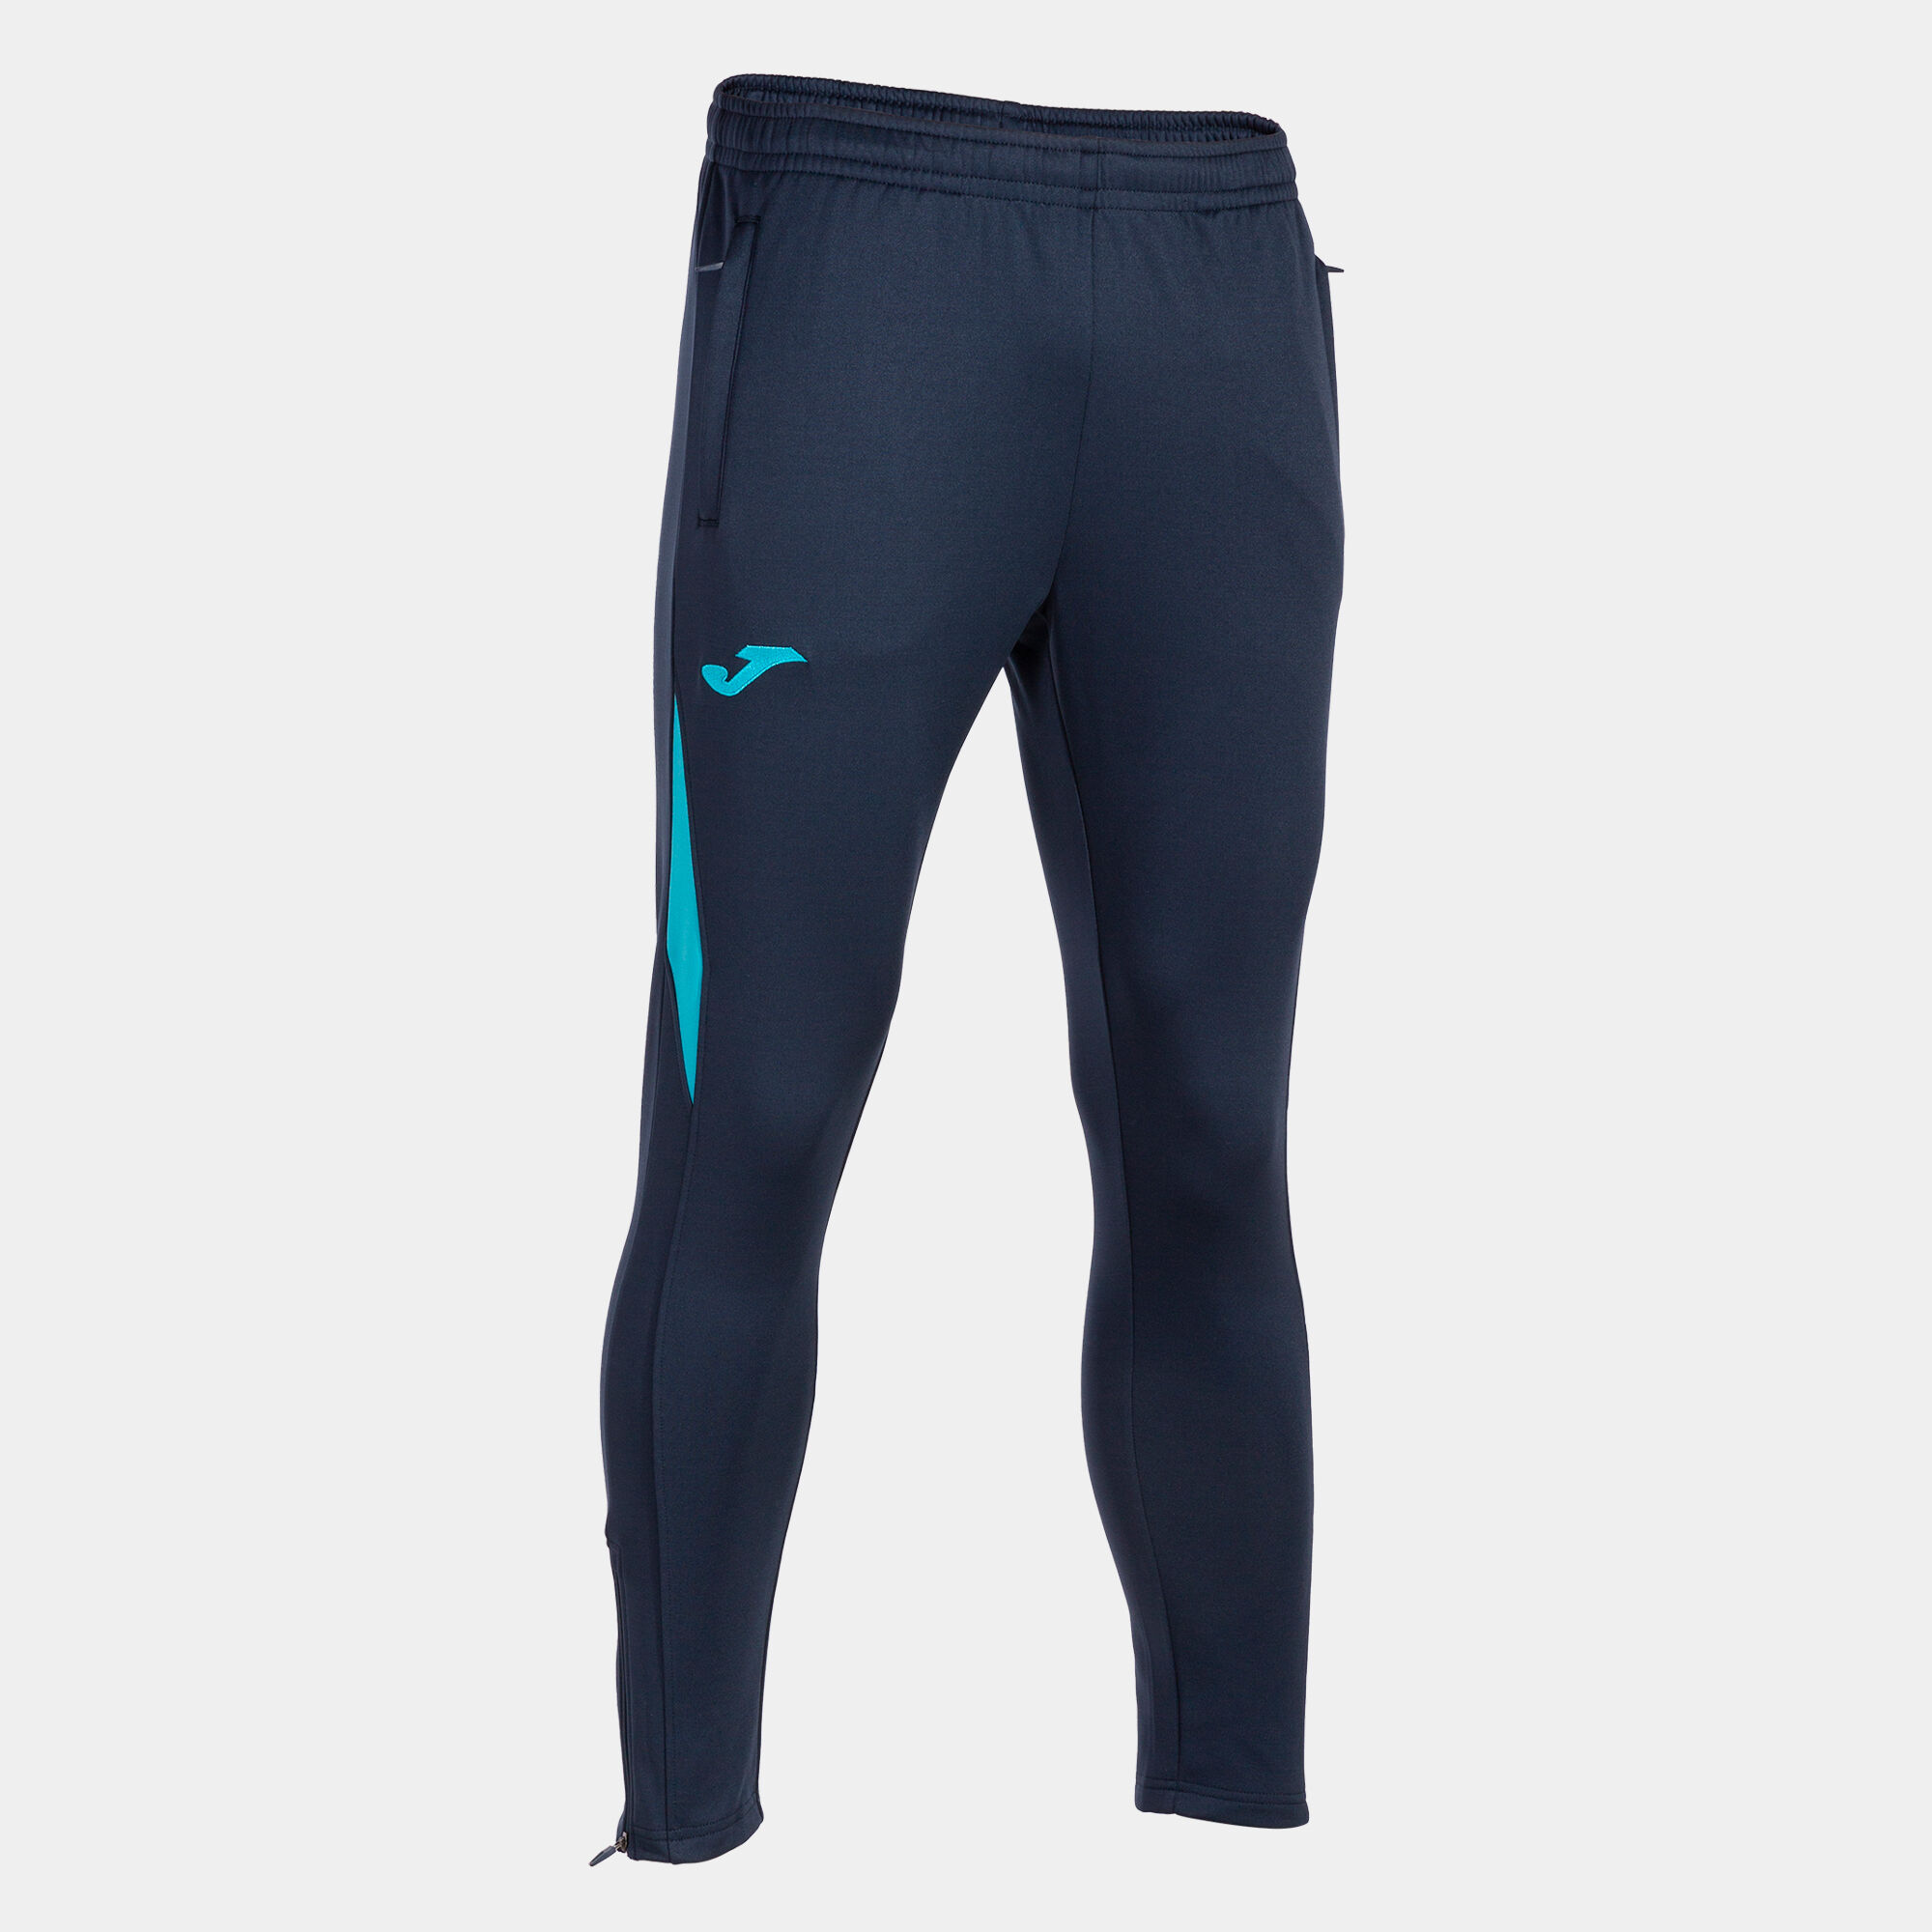 Pantalone lungo uomo Championship VII blu navy turchese fluorescente